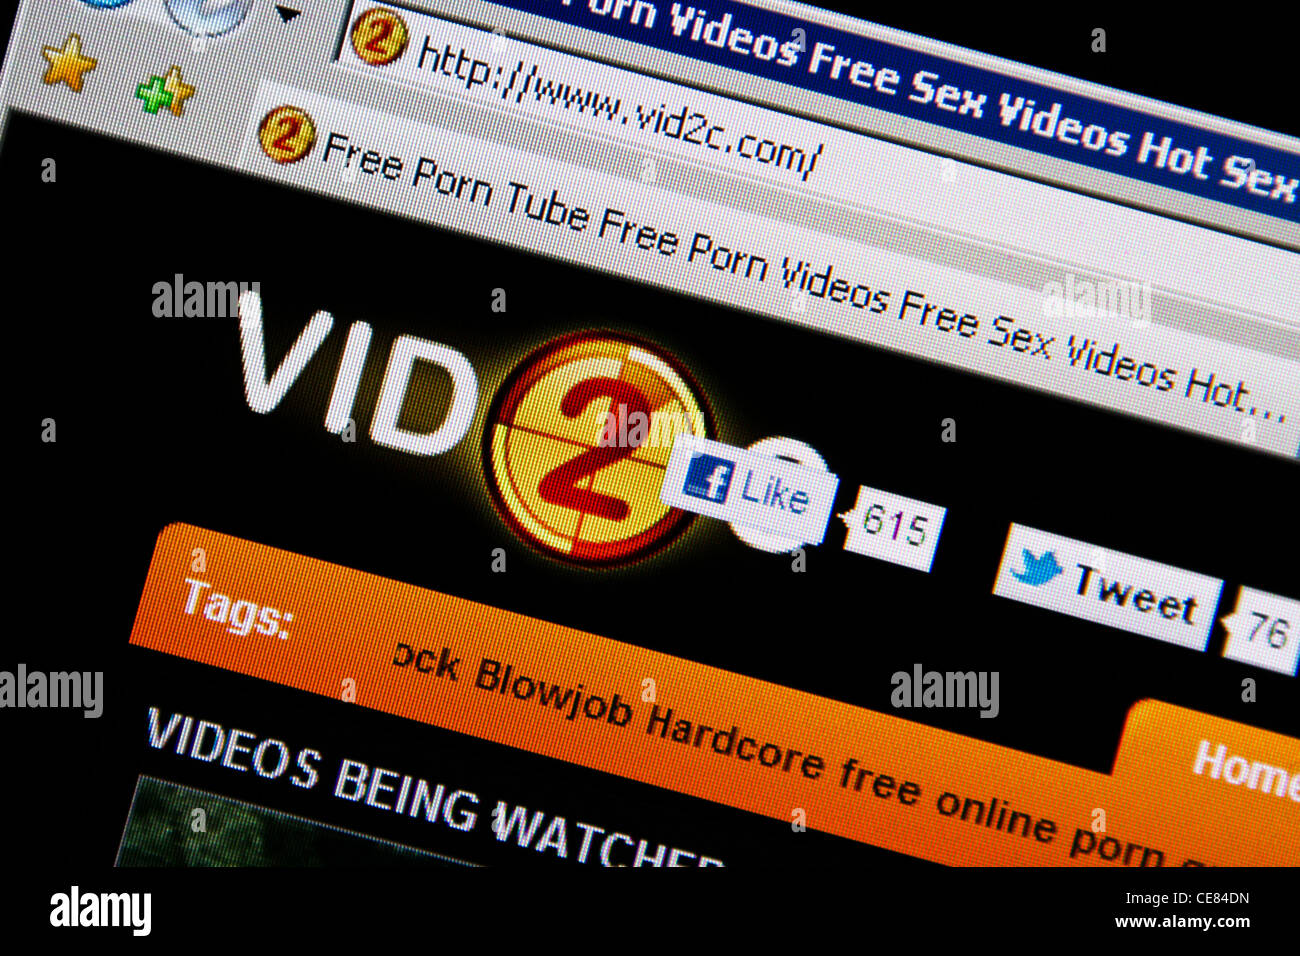 sex video movie online website vid2c Stock Photo